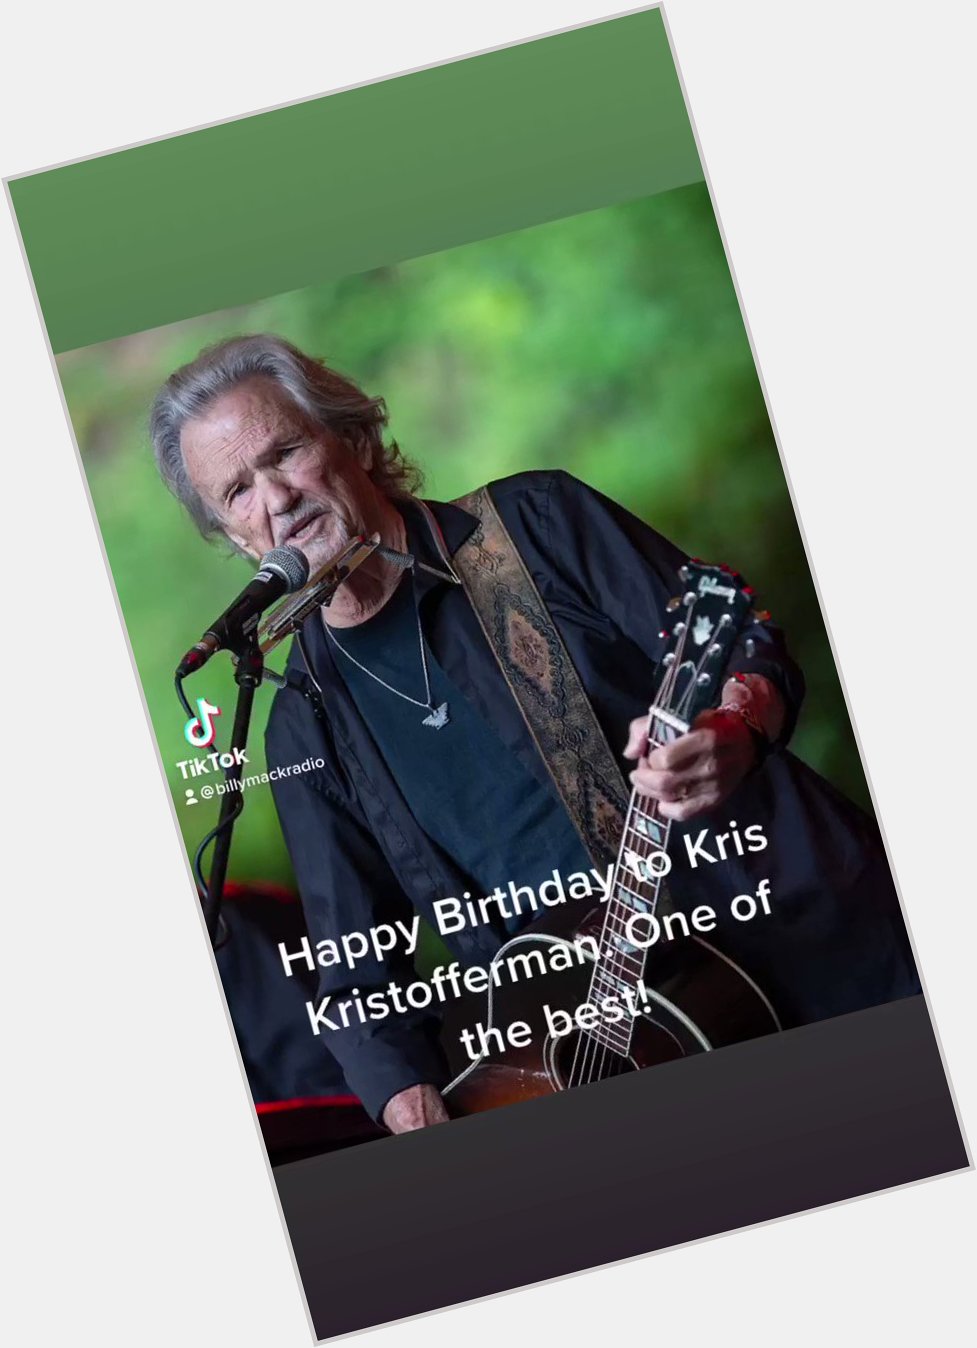 Happy Birthday to Kris Kristofferson! One of the best.  